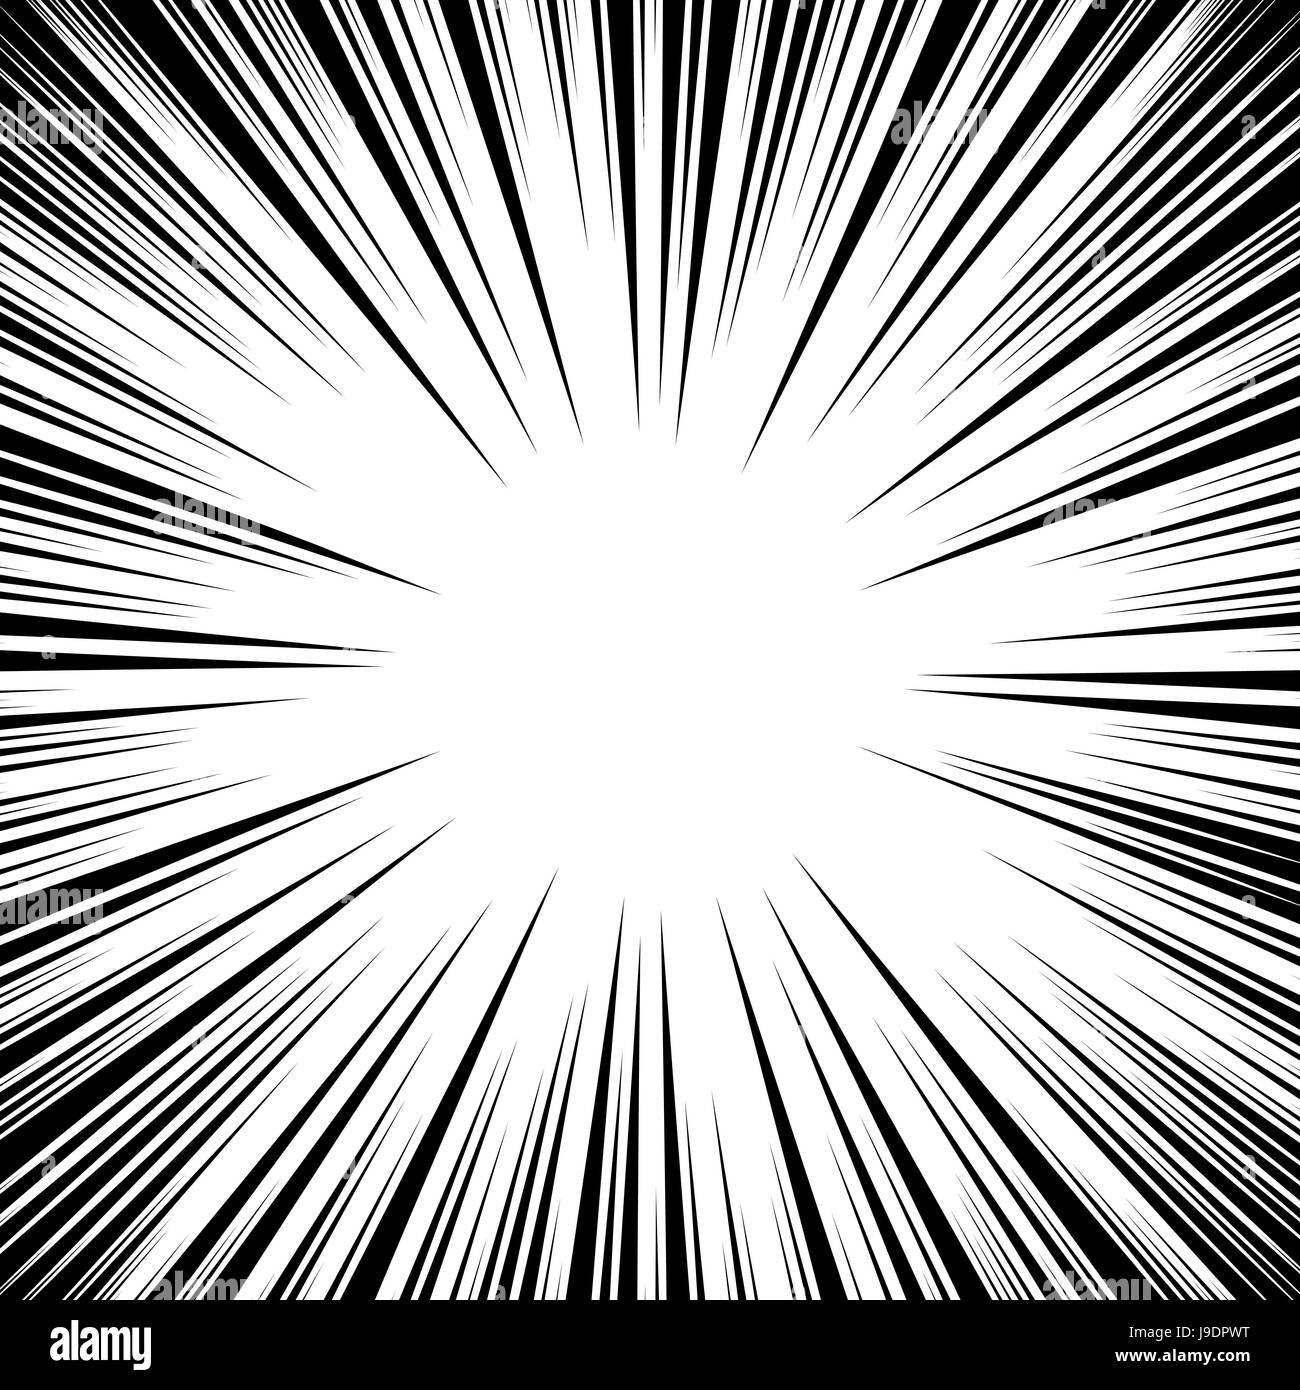 Manga Speed Lines Vector. Grunge Ray Illustration. Black And White